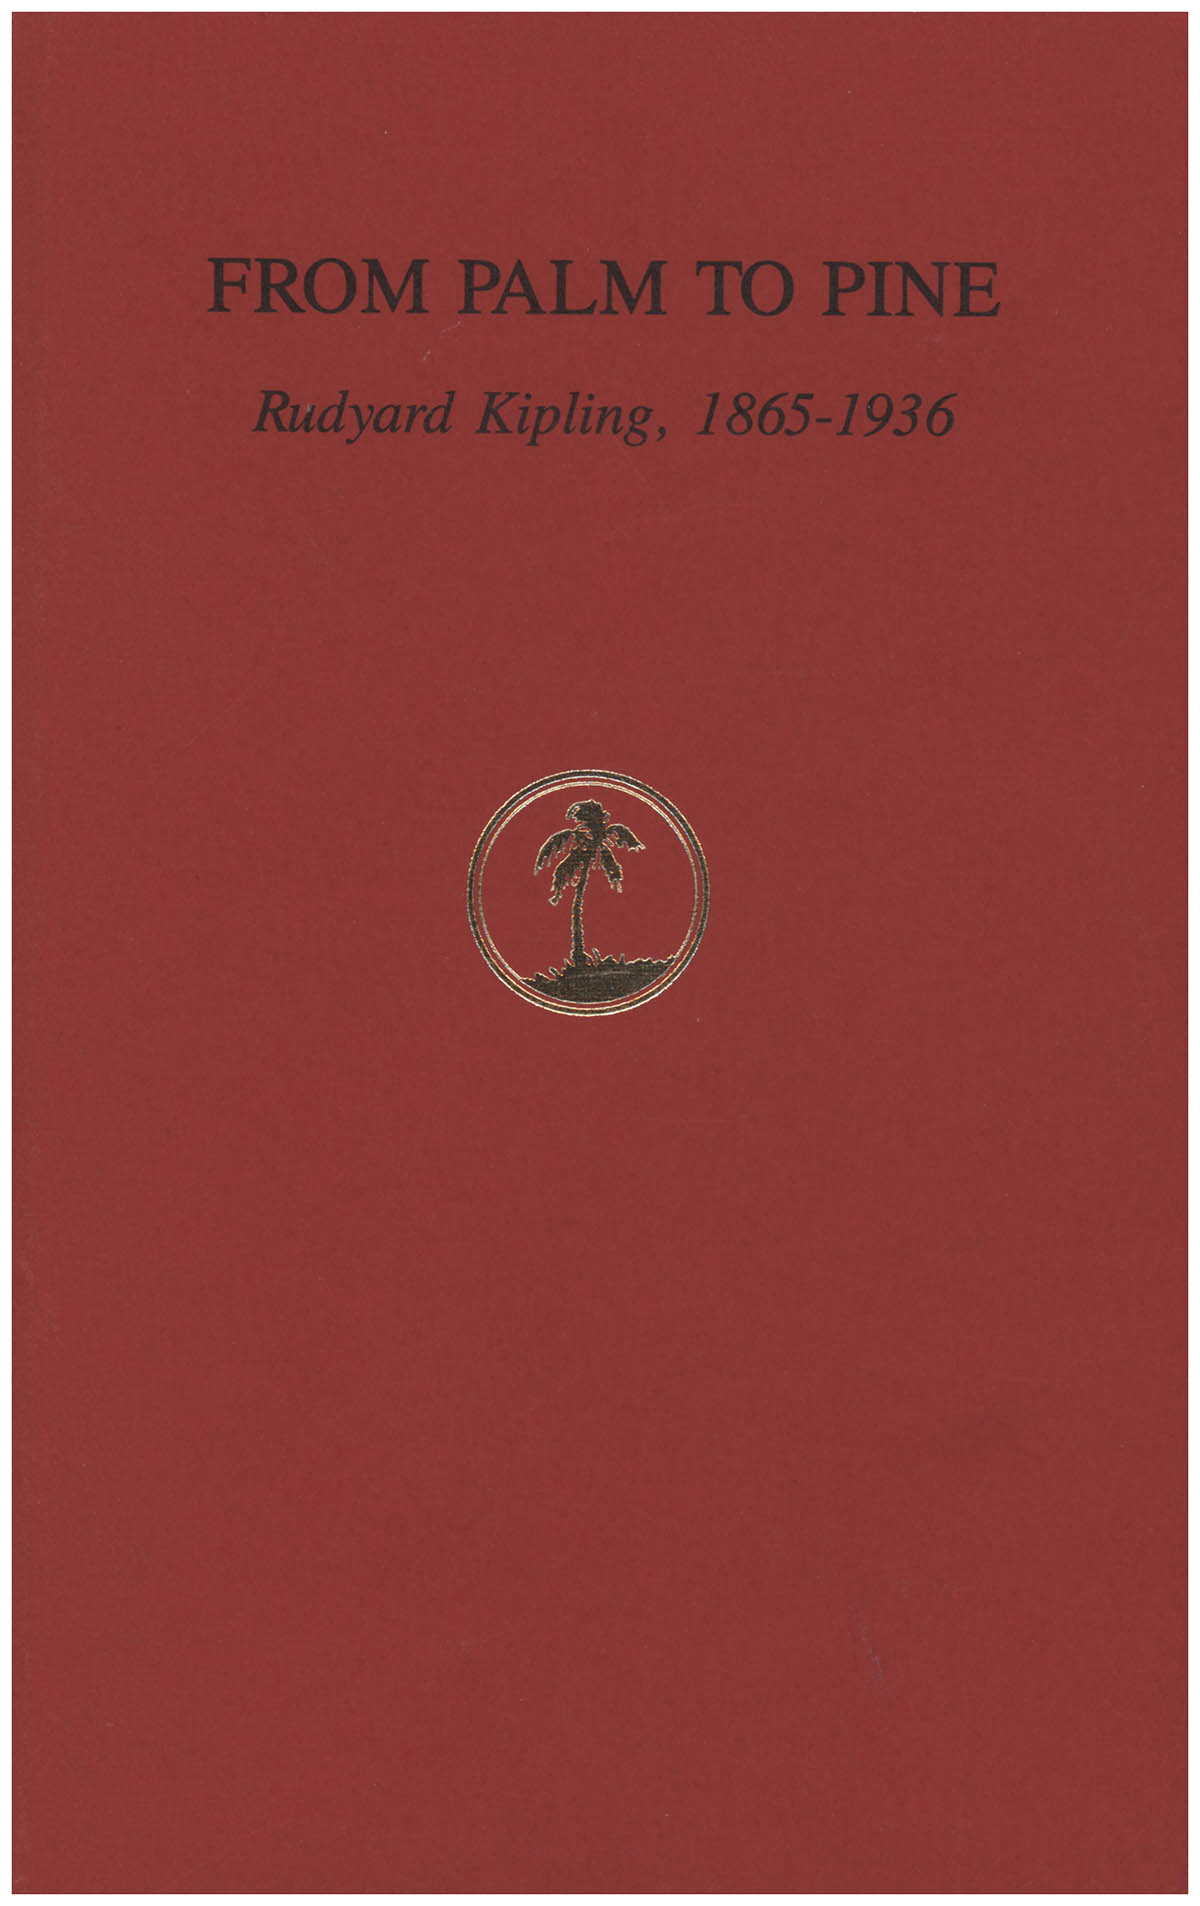 McCutchan, Corinne; Abraham, Mildred - From Palm to Pine: Rudyard Kipling, 1865-1936 (Exhibition Keepsake)